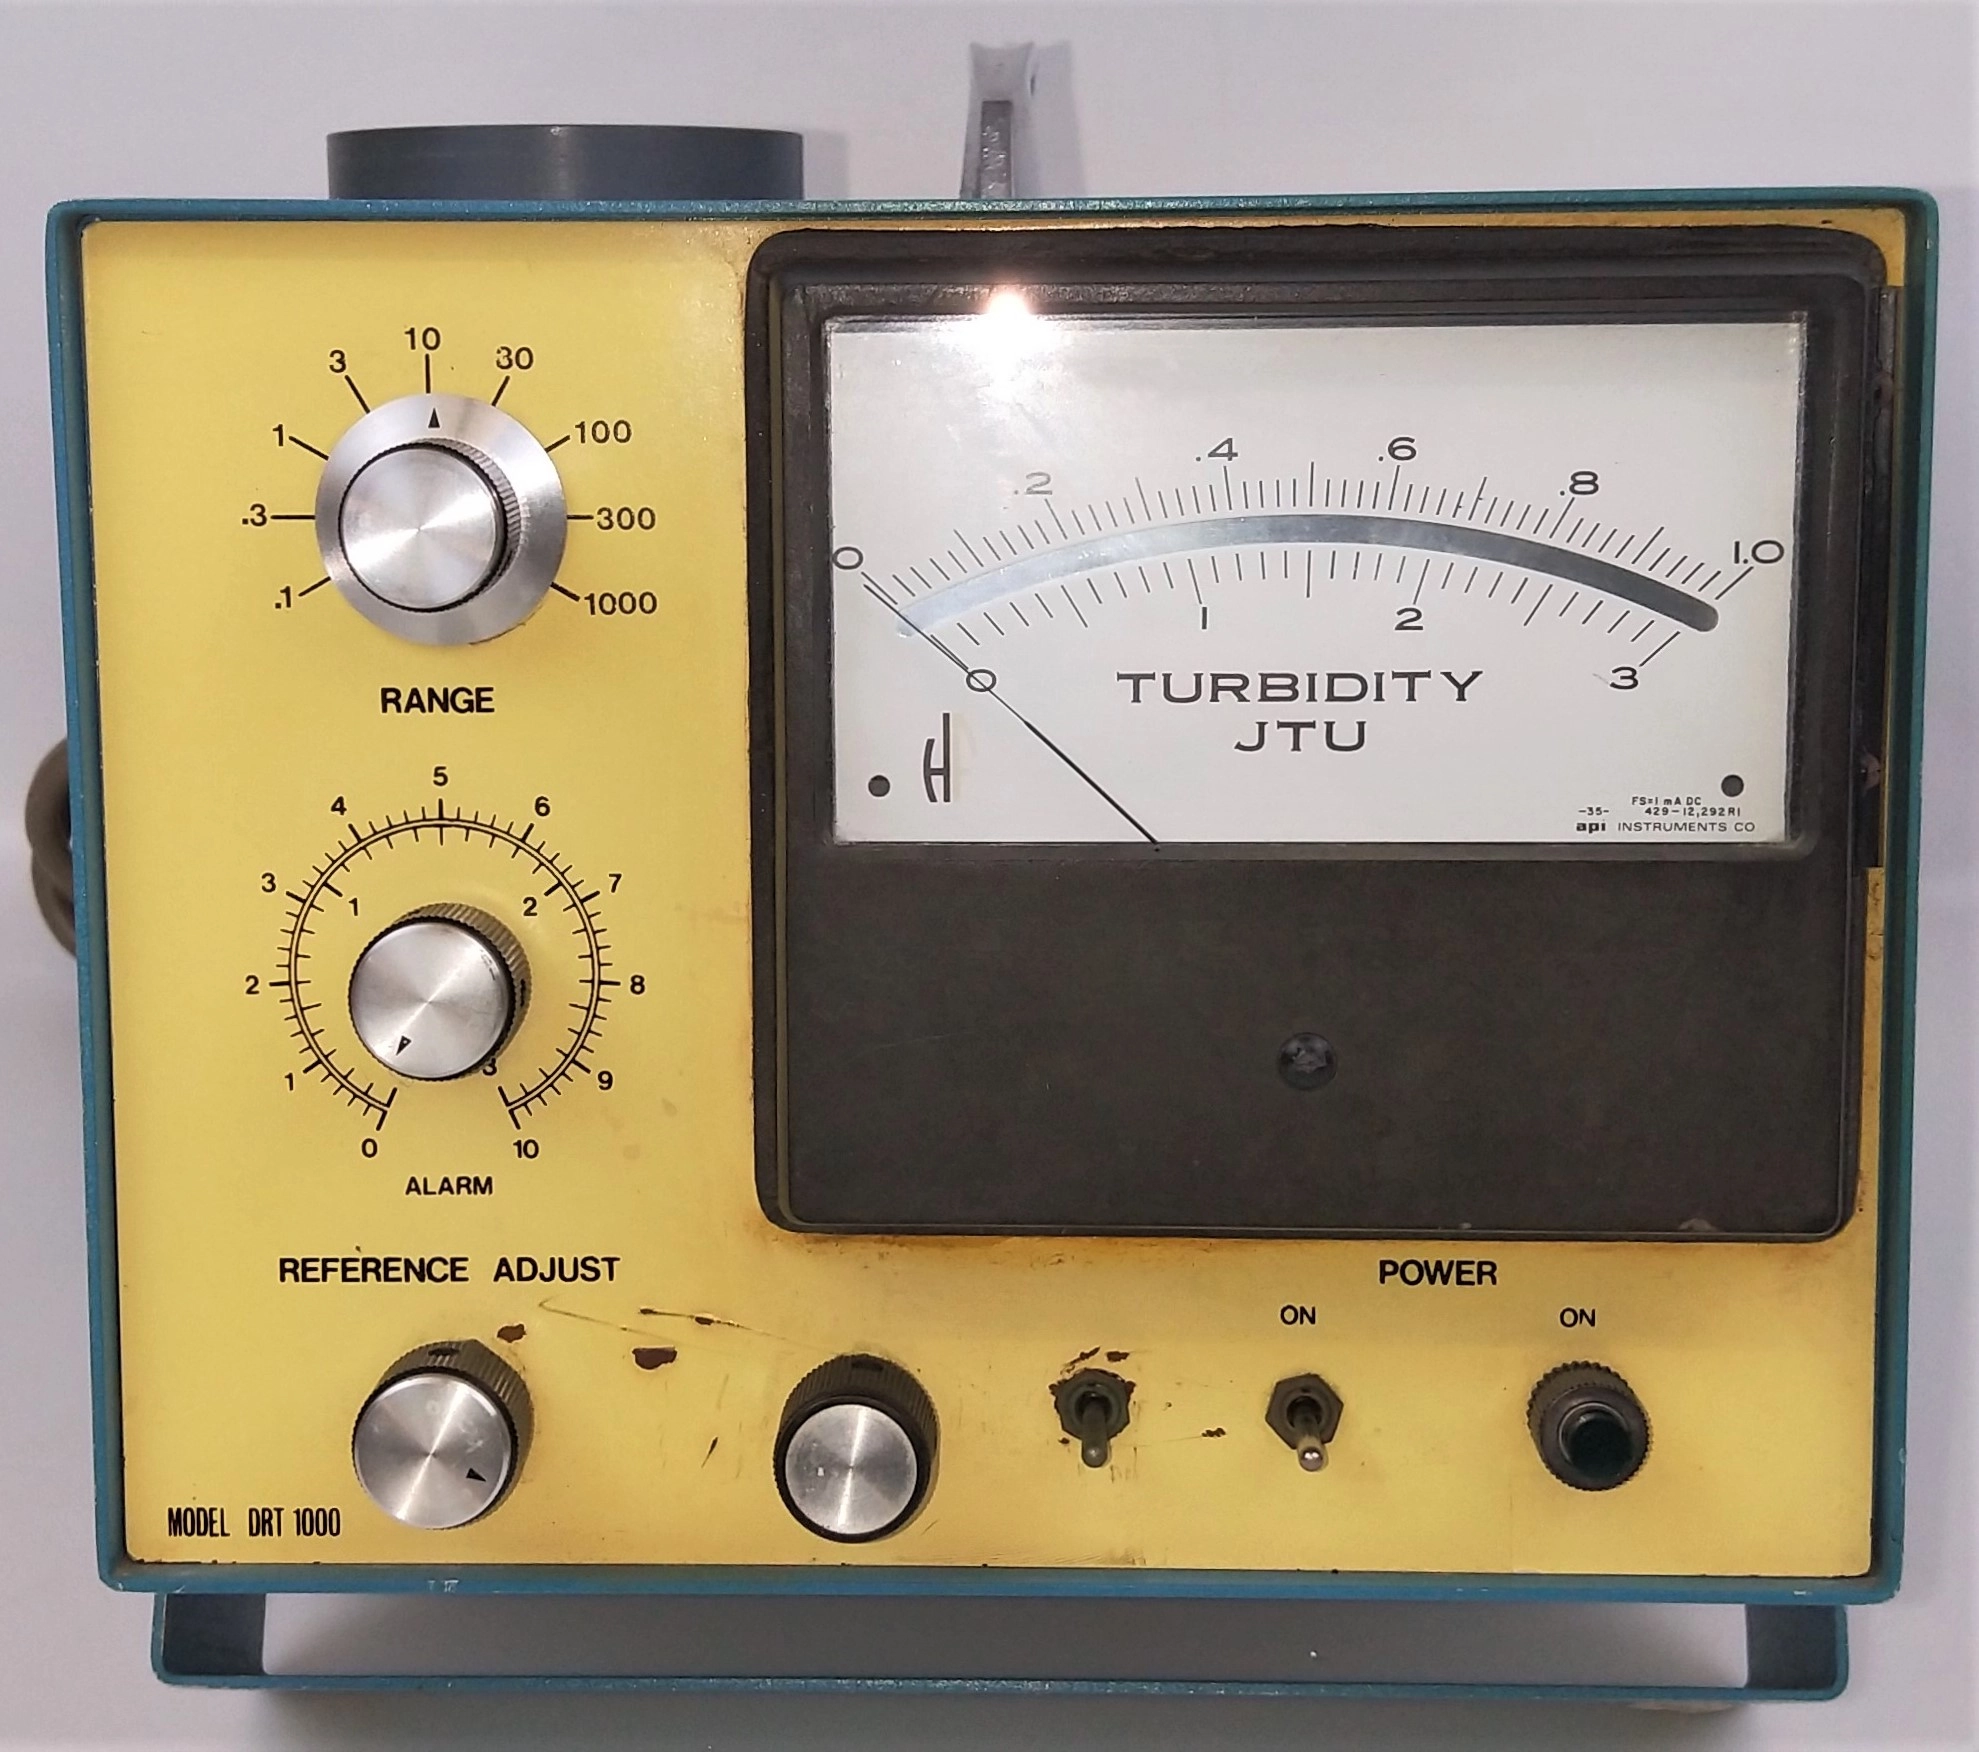 HF Scientific DRT-1000 Turbidity Meter